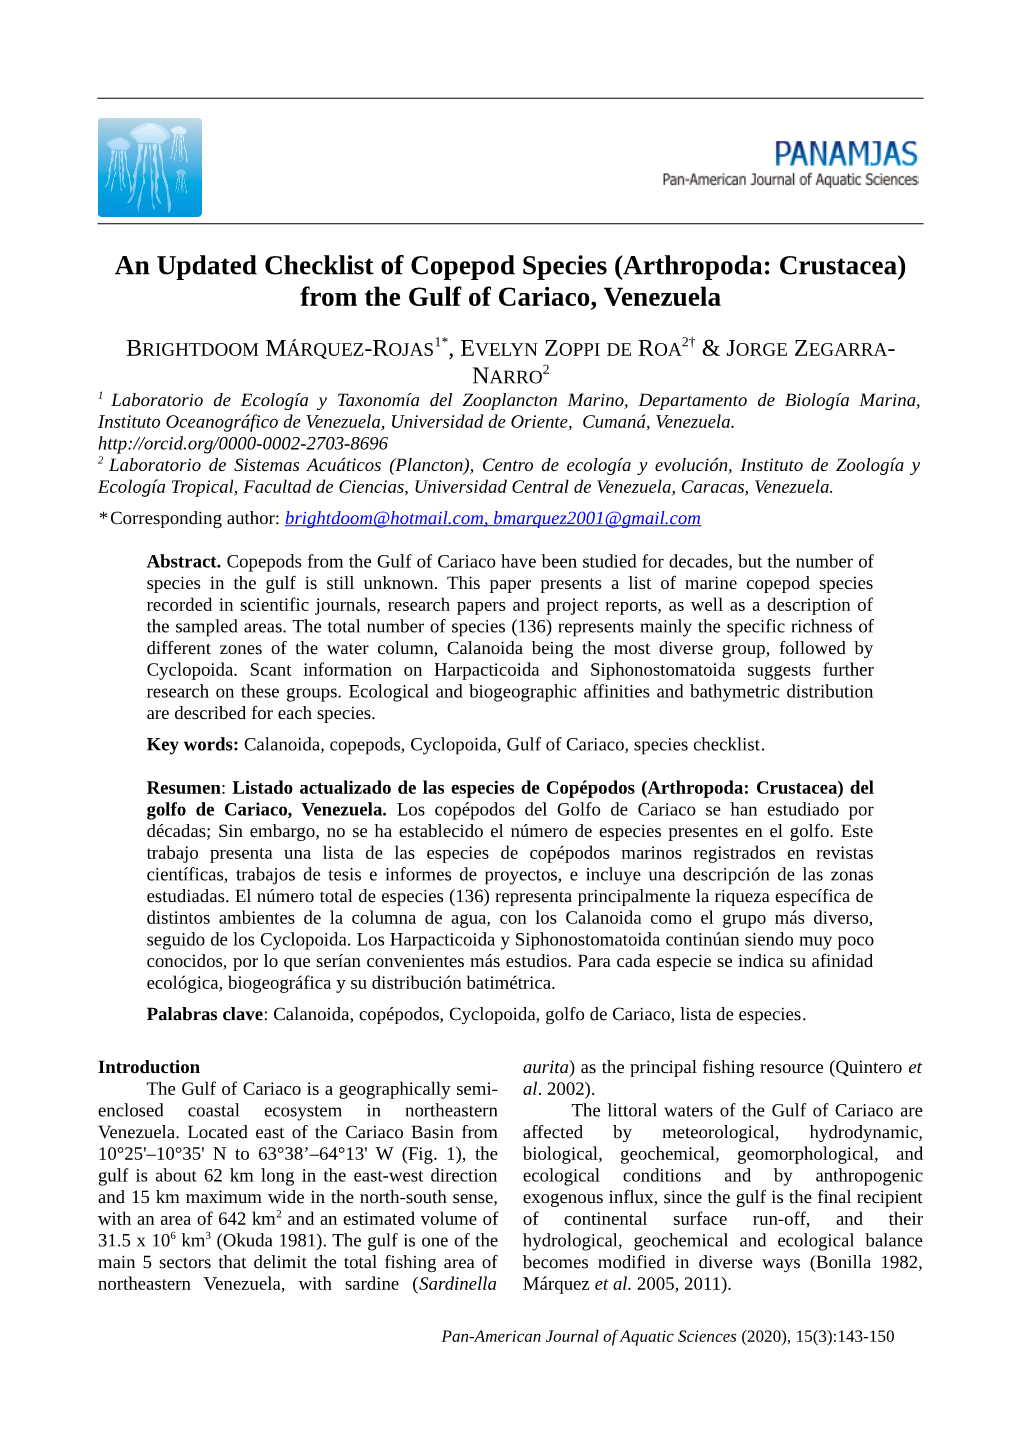 An Updated Checklist of Copepod Species (Arthropoda: Crustacea) from the Gulf of Cariaco, Venezuela